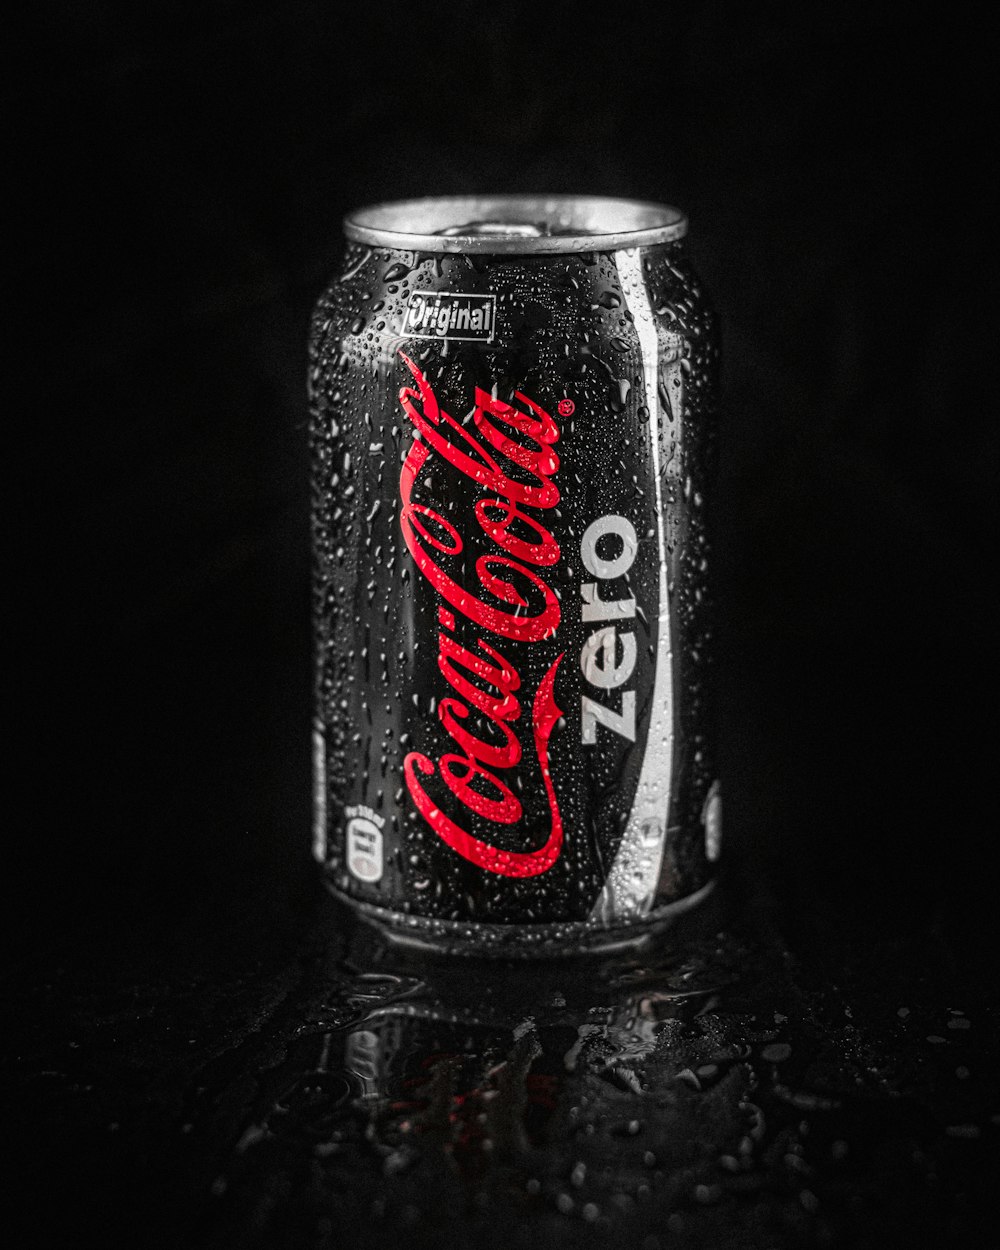 Coca cola zero can on black surface photo – Free Tabriz Image on Unsplash